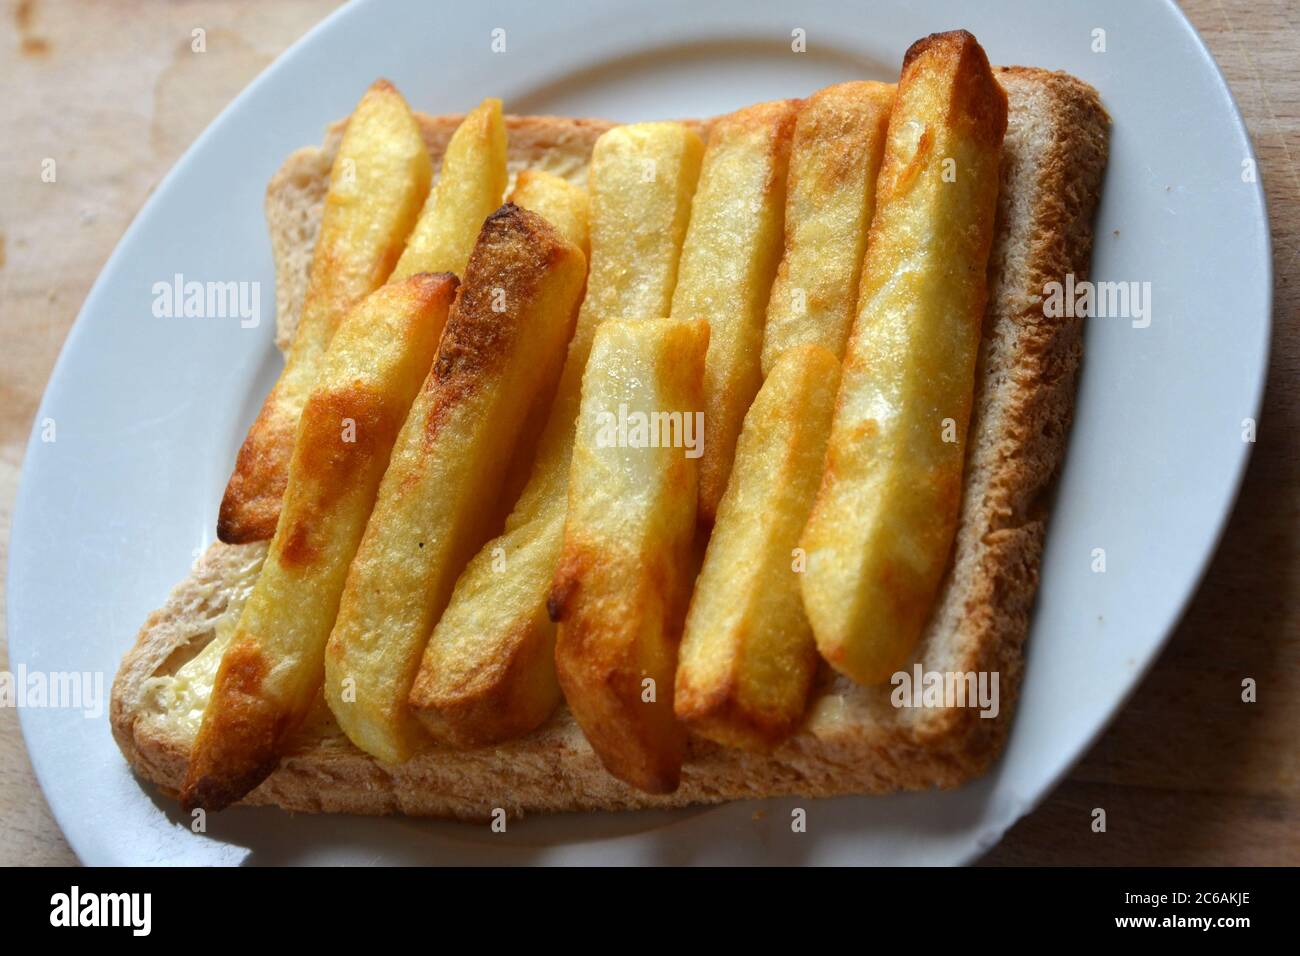 chip butty, chip sandwich Stock Photo